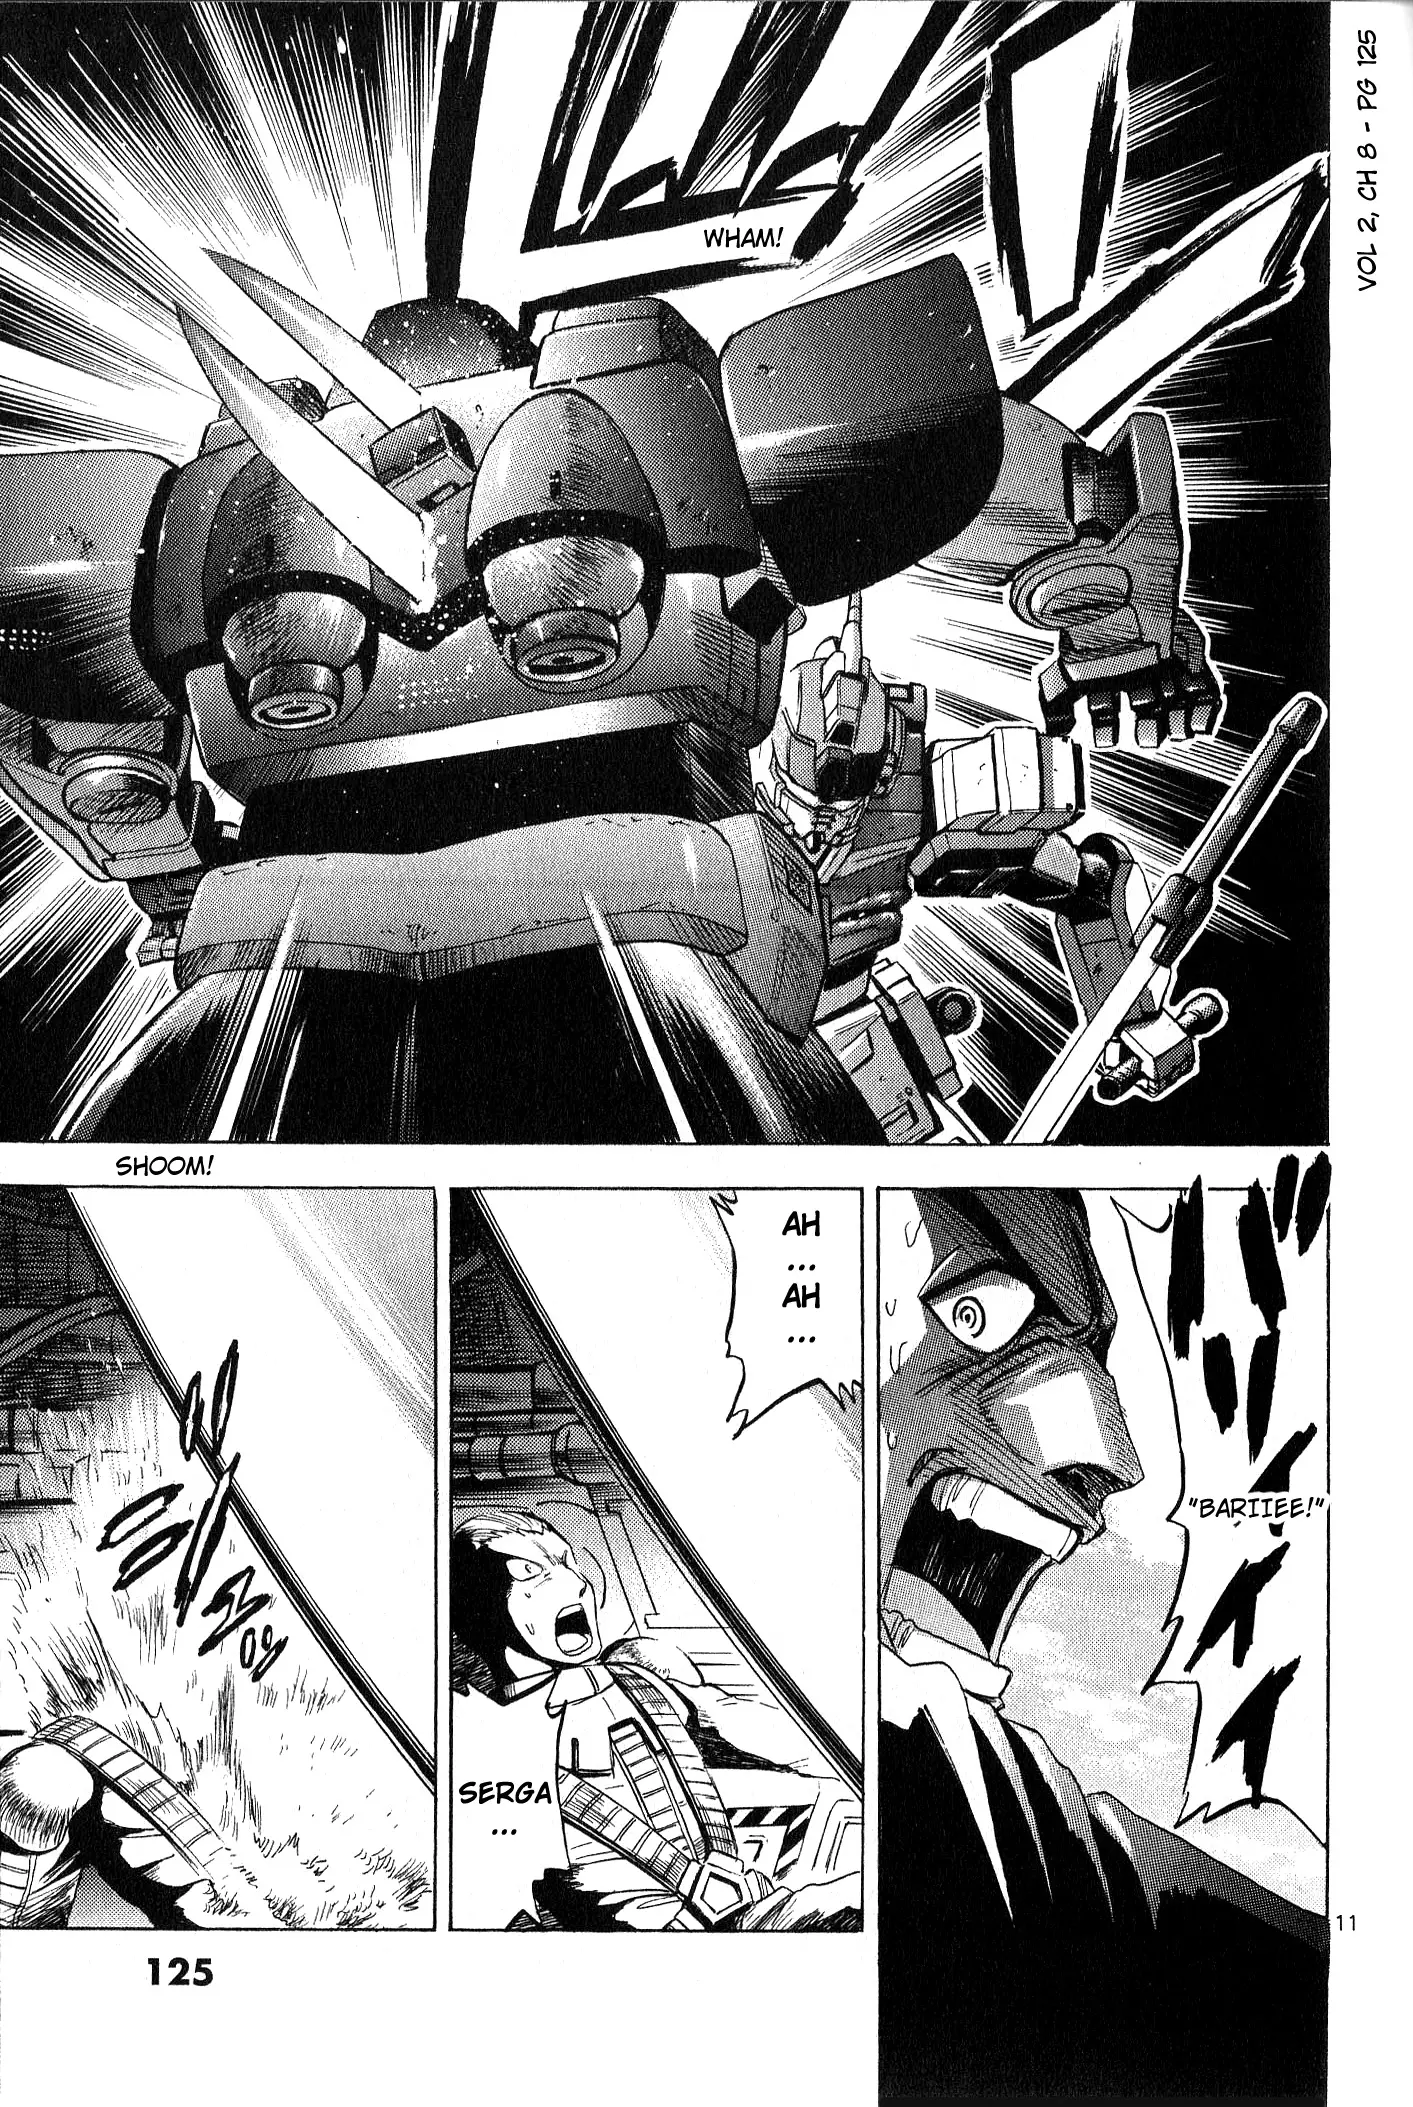 Mobile Suit Gundam Aggressor - 8 page 9-3938285c